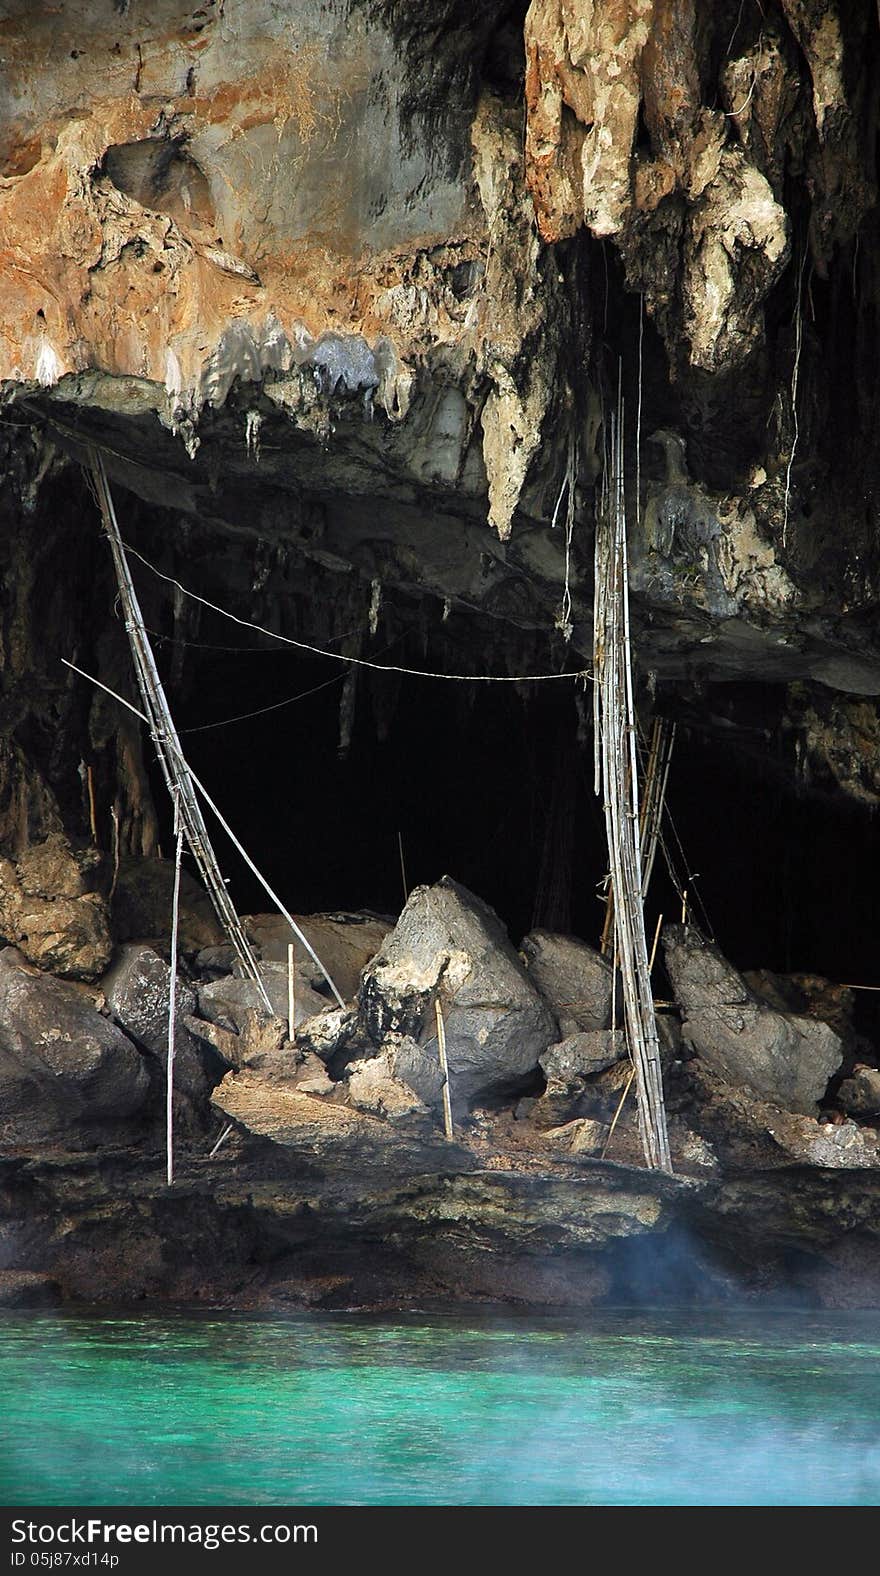 The Viking cave at Krabi Thailand. The Viking cave at Krabi Thailand